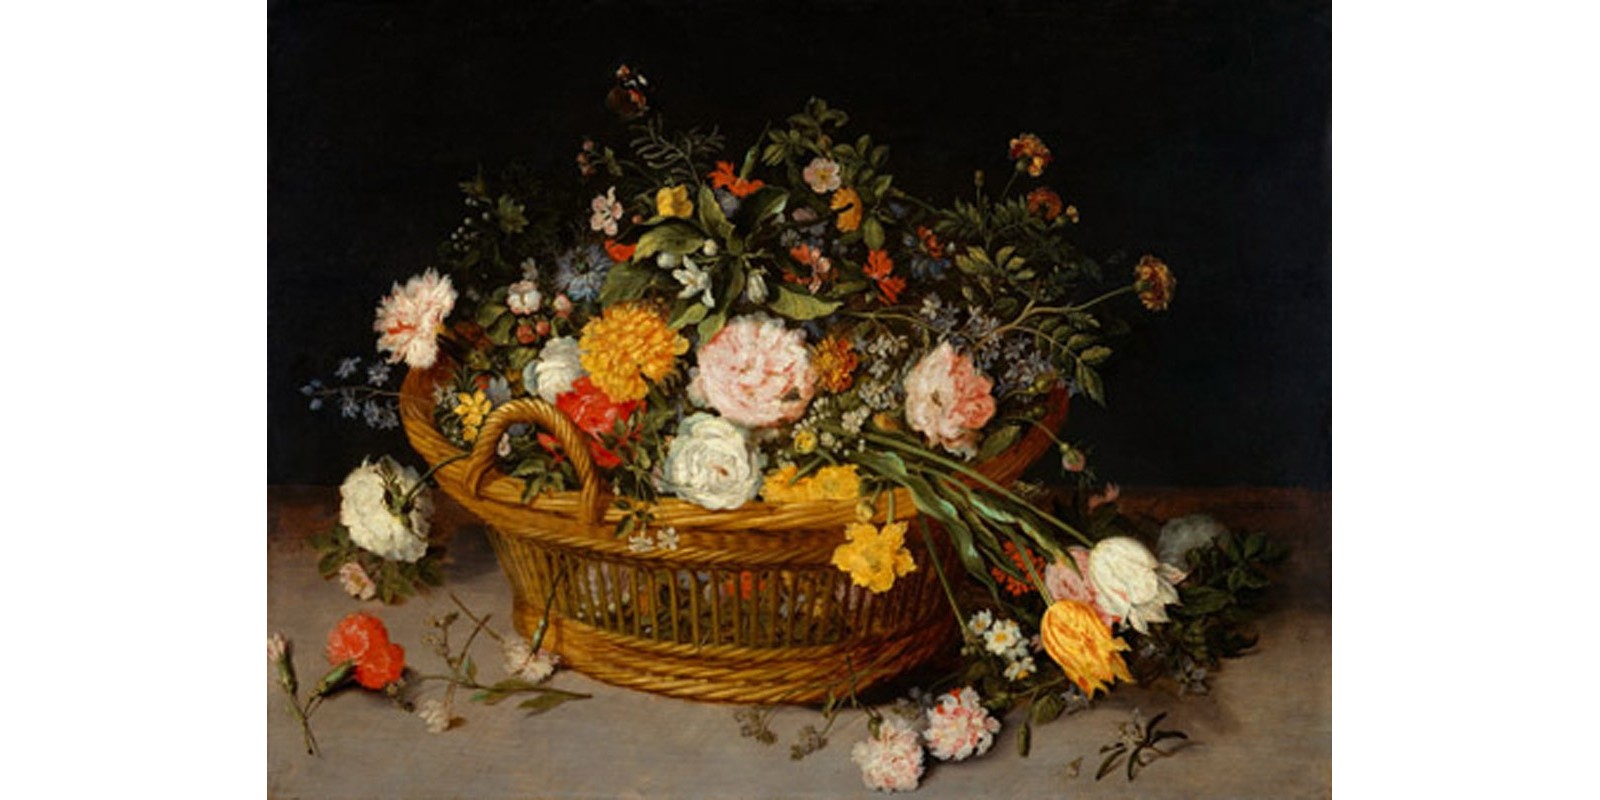 Jan Bruegel The Younger - A Basket of Flowers